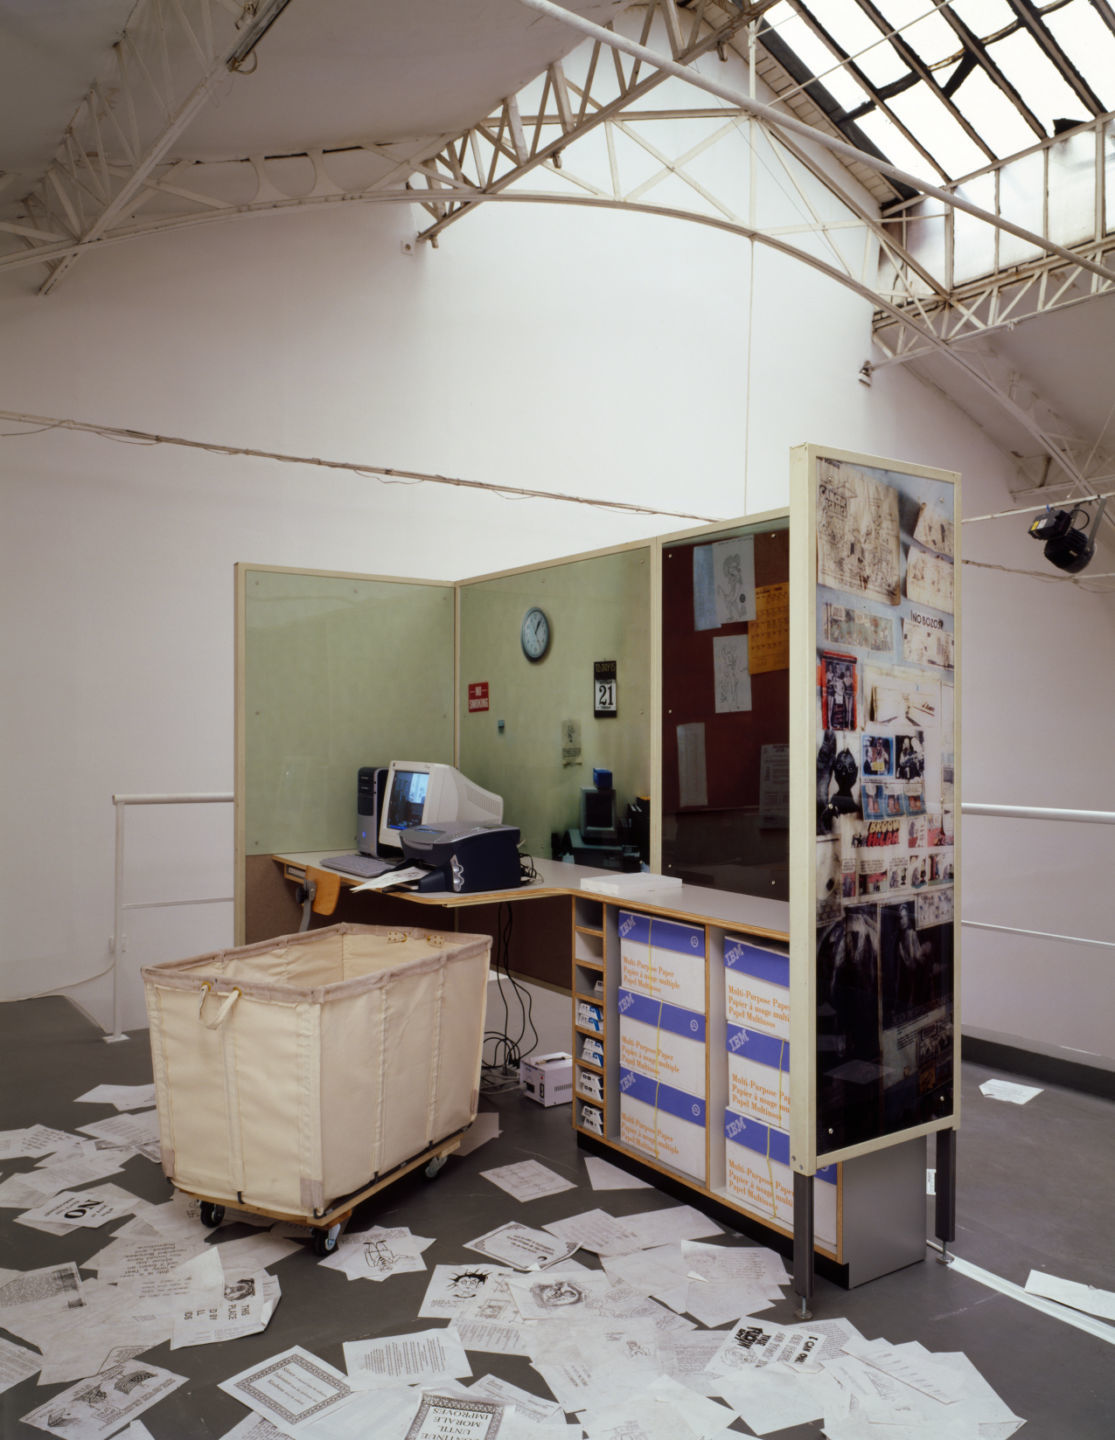 Installation view, Galerie Ghislane Hussenot, Paris, 2006.